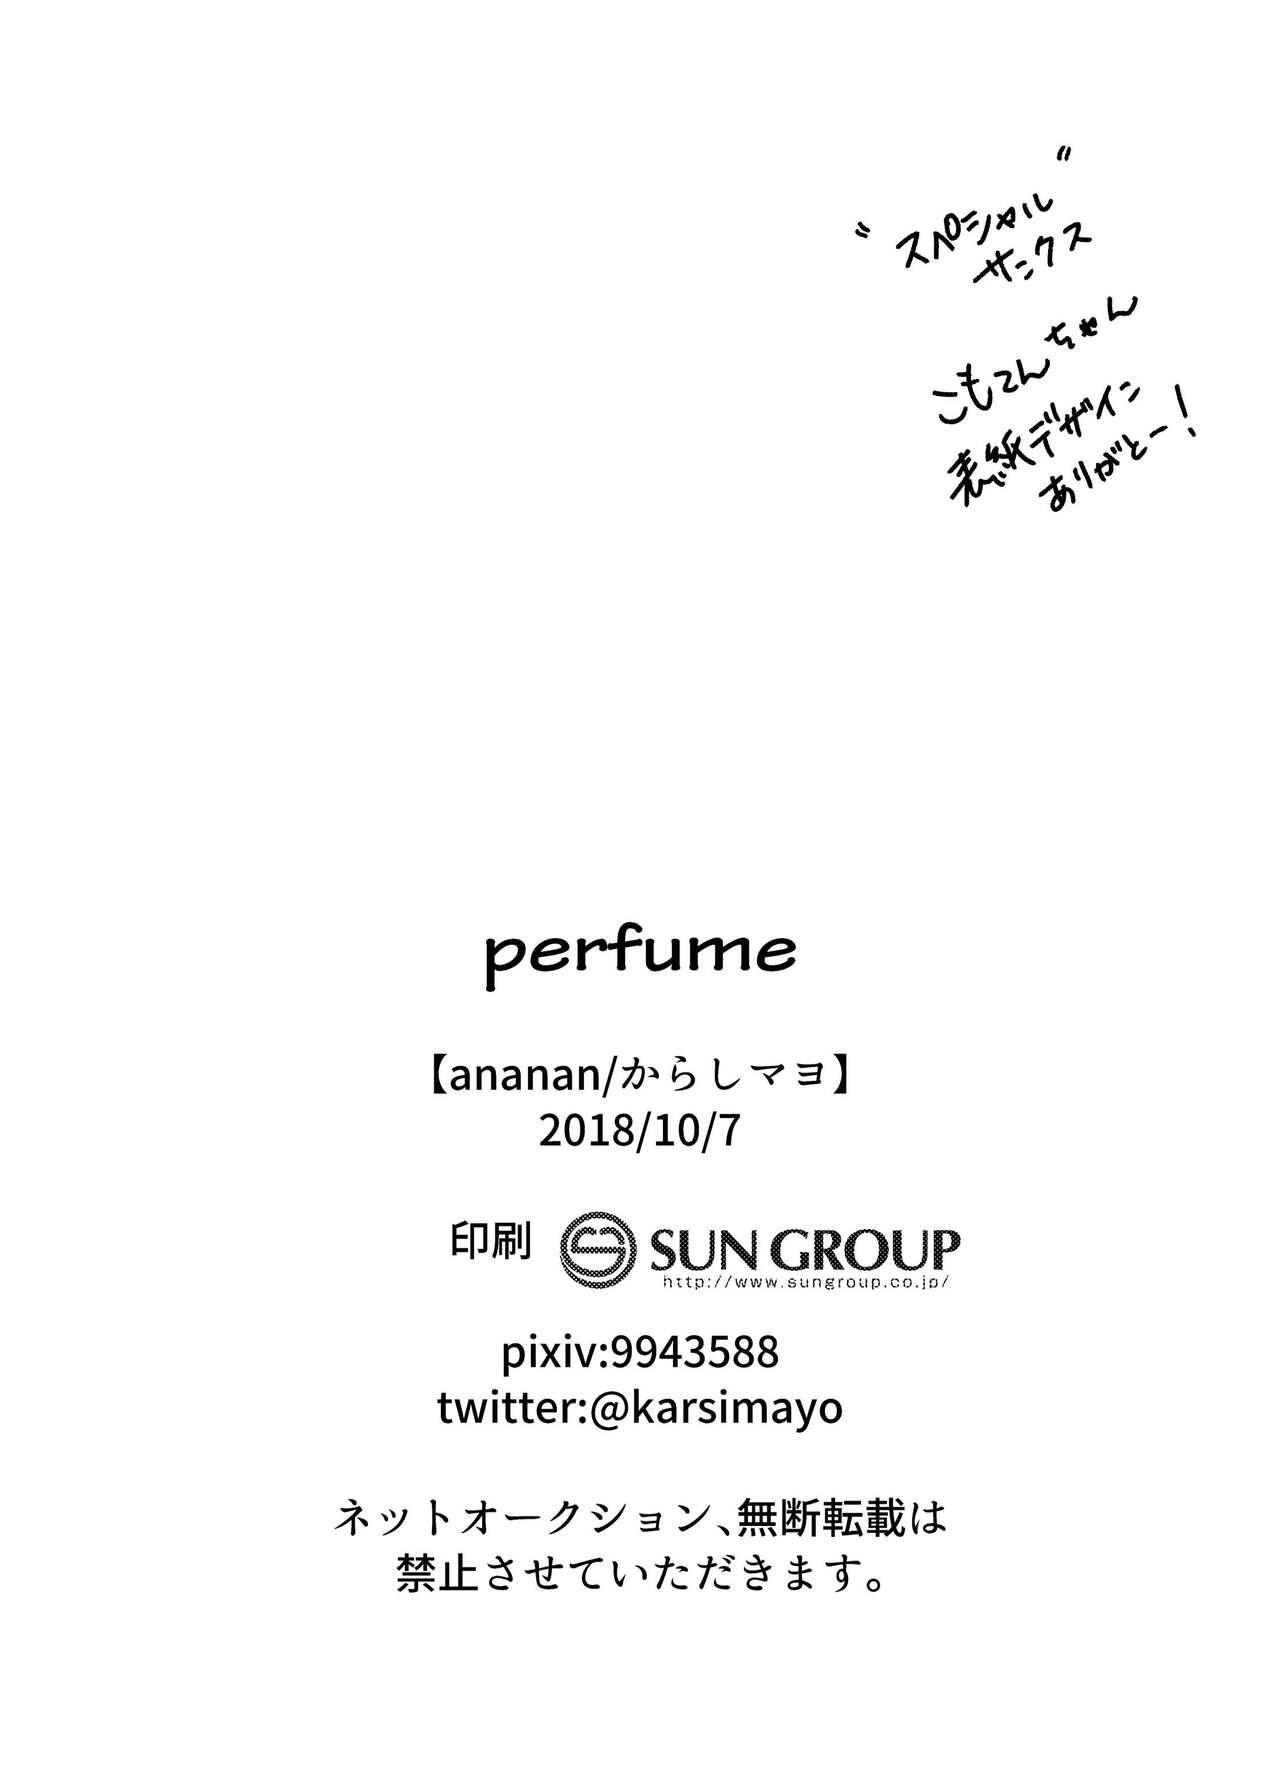 Perfume 21